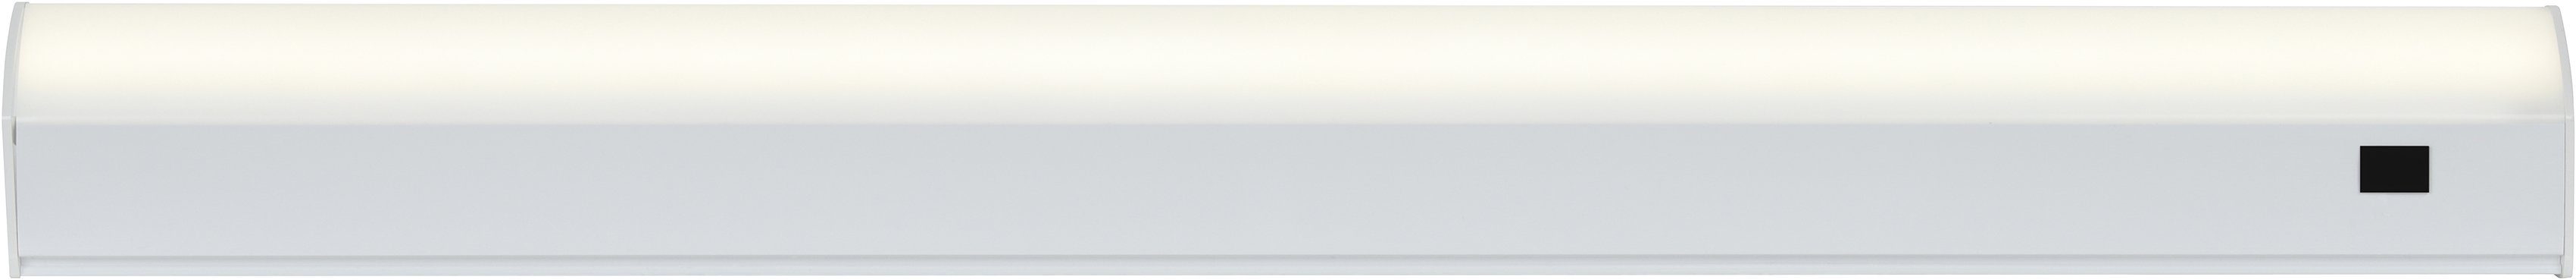 Nordlux Unterschrankleuchte Bity, LED fest integriert, Warmweiß, inkl. 6W LED, 530 Lumen, inkl. Bewegungssensor